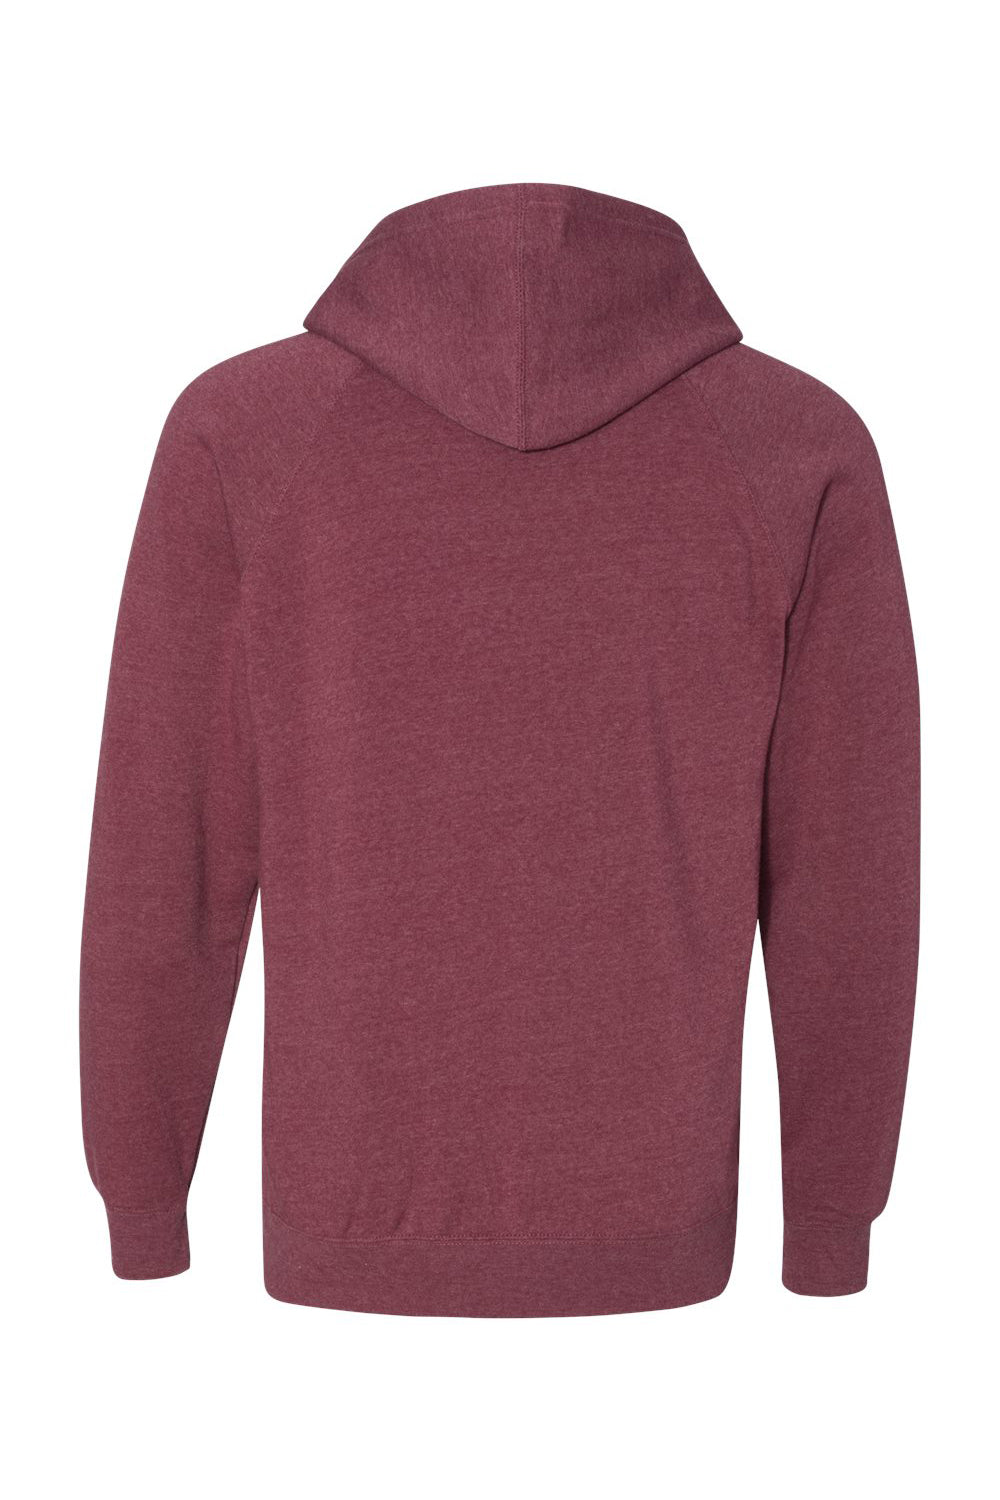 Independent Trading Co. PRM33SBP Mens Special Blend Raglan Hooded Sweatshirt Hoodie Crimson Red Flat Back